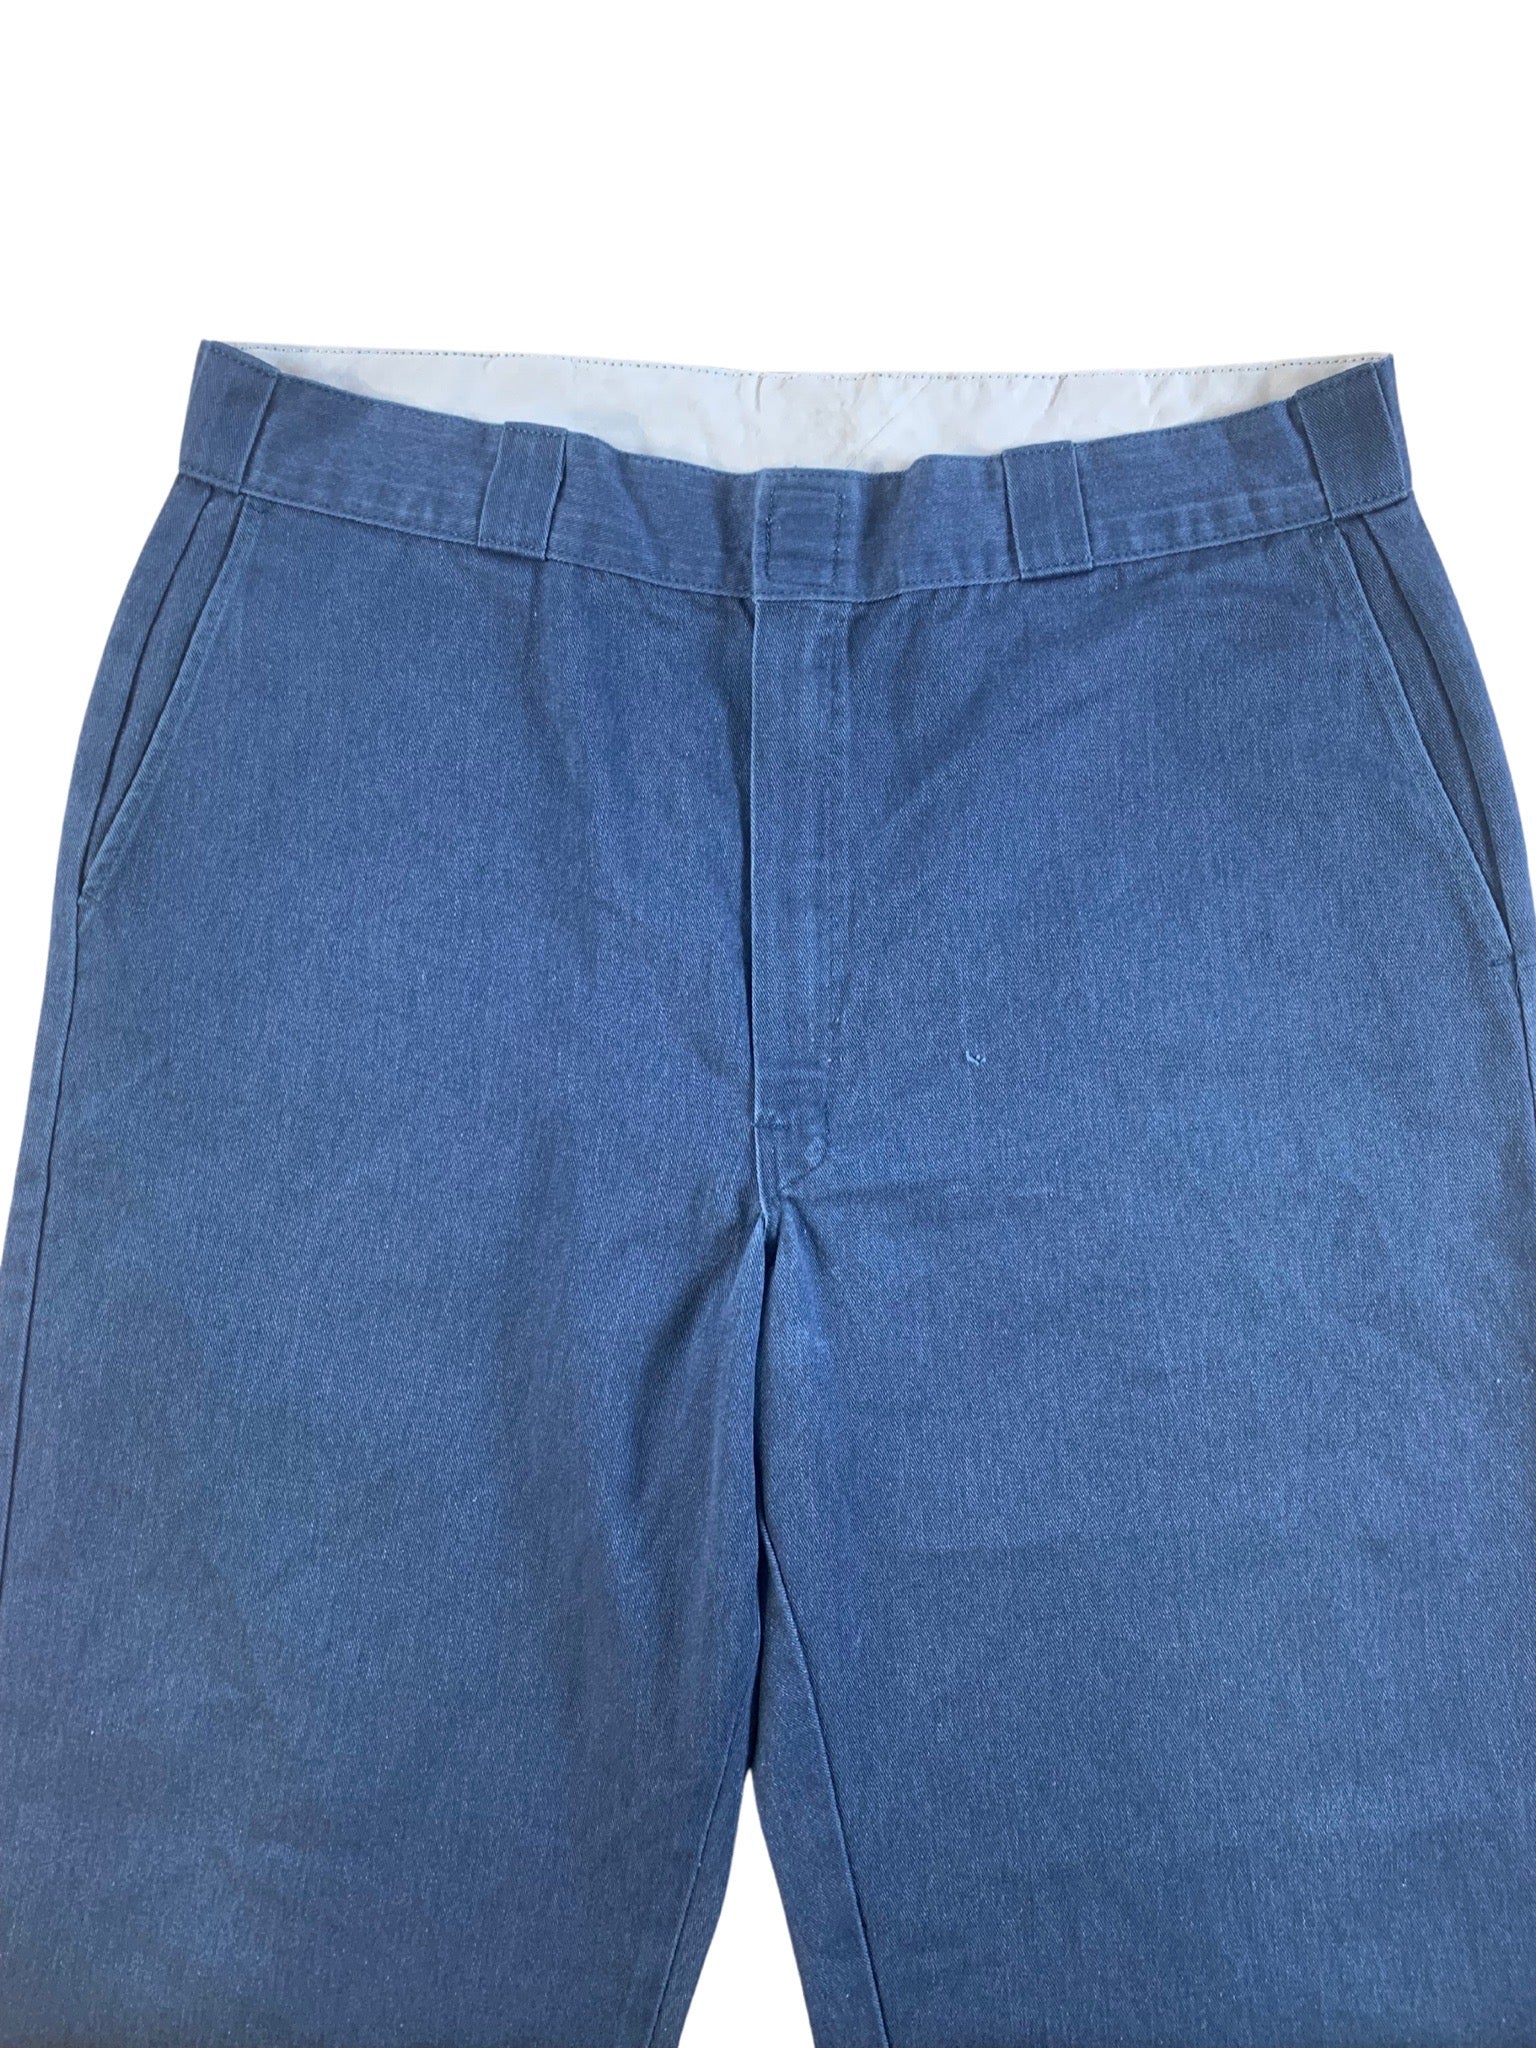 1x Vintage DICKIES Navy Blue Straight Leg Trousers - Waist 42 - Length 32 - Vintage Superstore Online